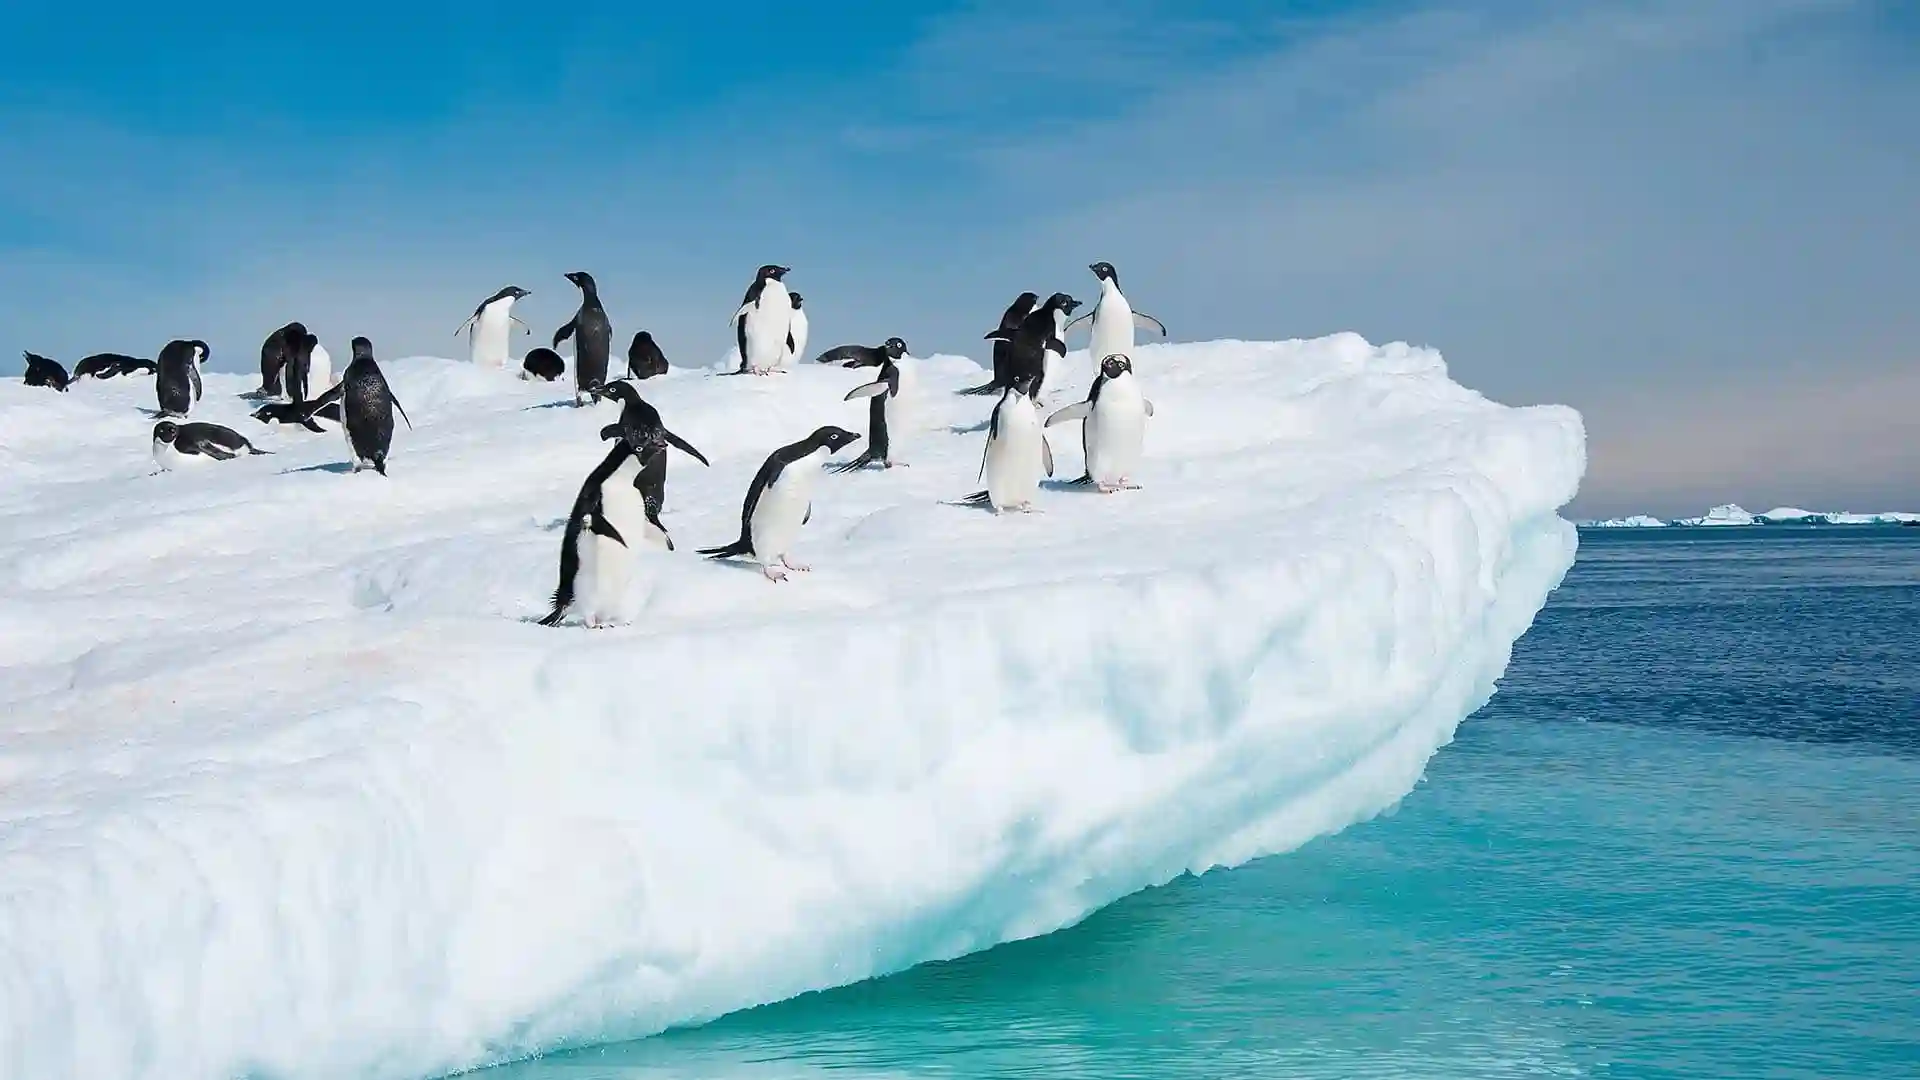 View of penguins on iceberg in Antarctica.